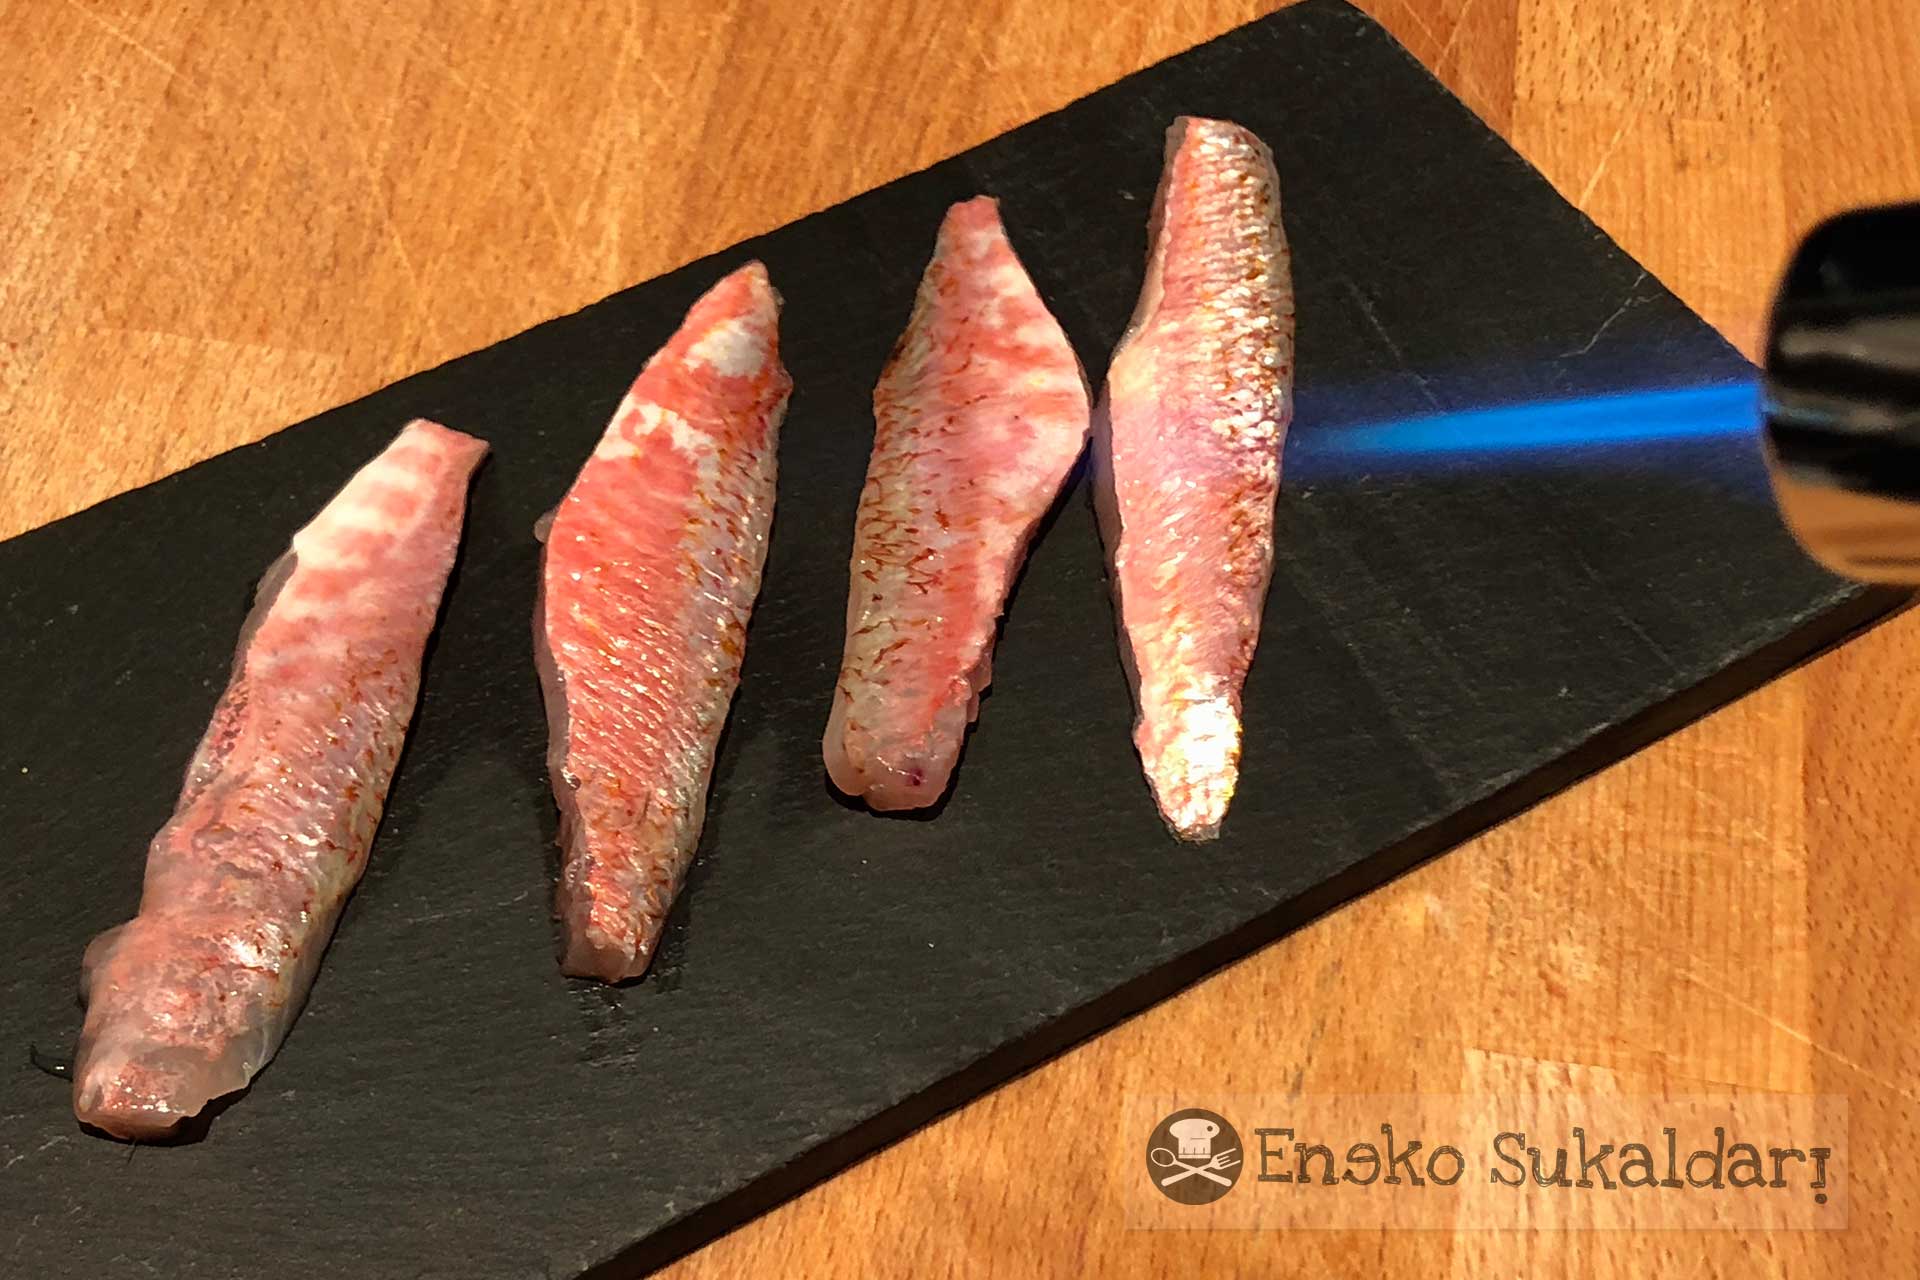 Salmorejo con salmonetes asados y trufa - Receta - Eneko sukaldari